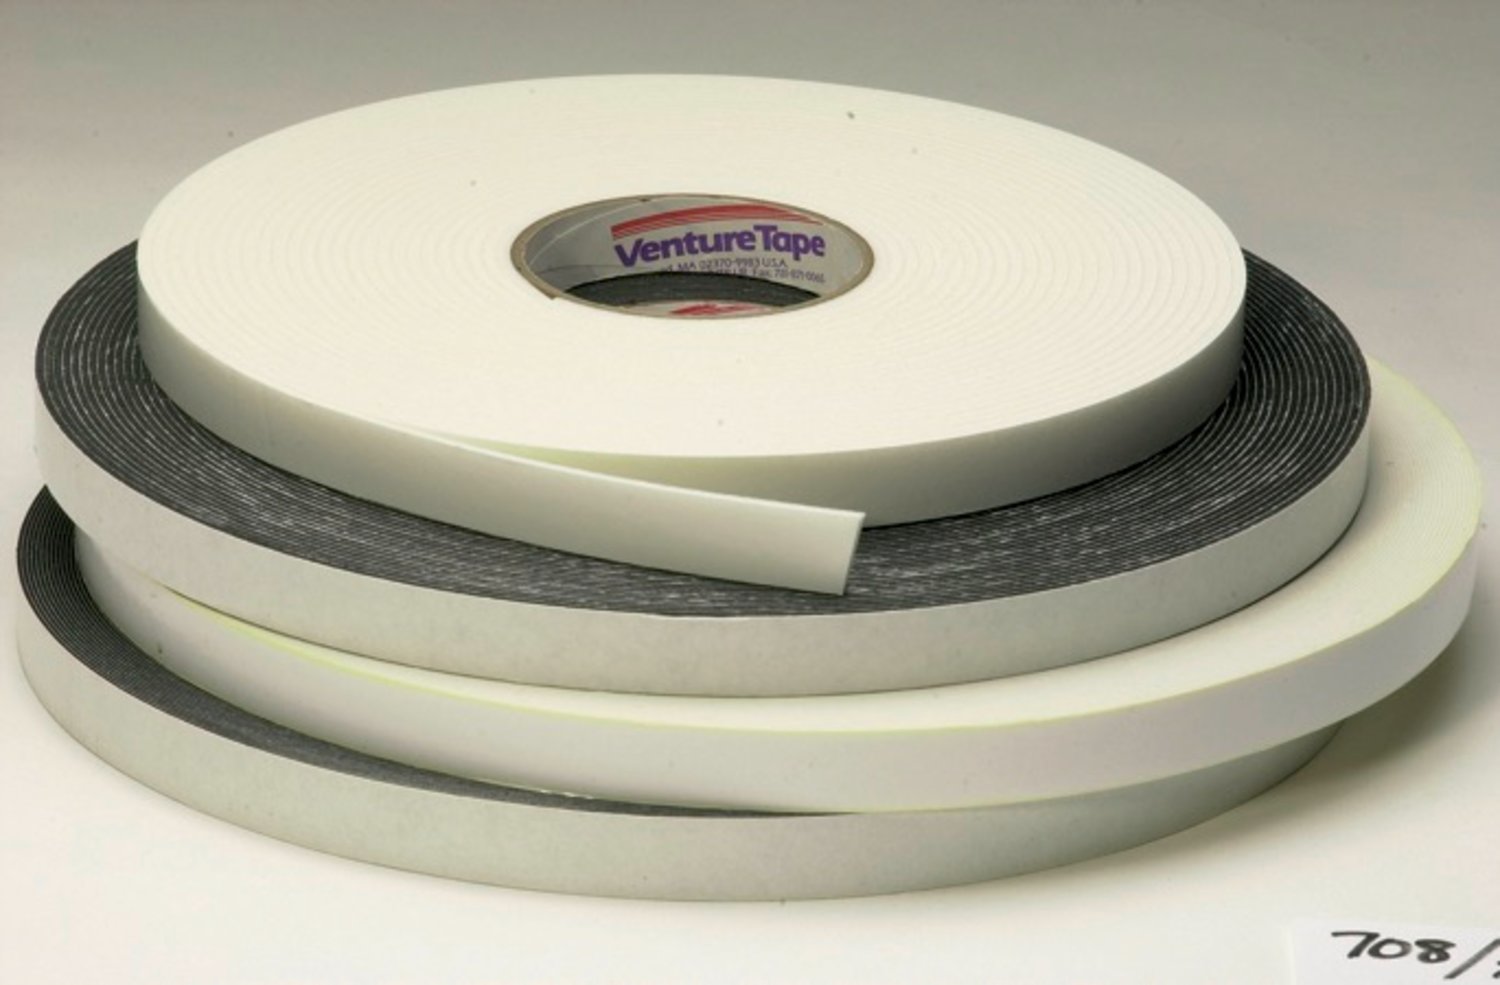 7010379967 - 3M Venture Tape Double Sided Polyethylene Foam Glazing Tape VG7132,
White, 7/16 in 250 ft, 31 mil, 45 rolls per case